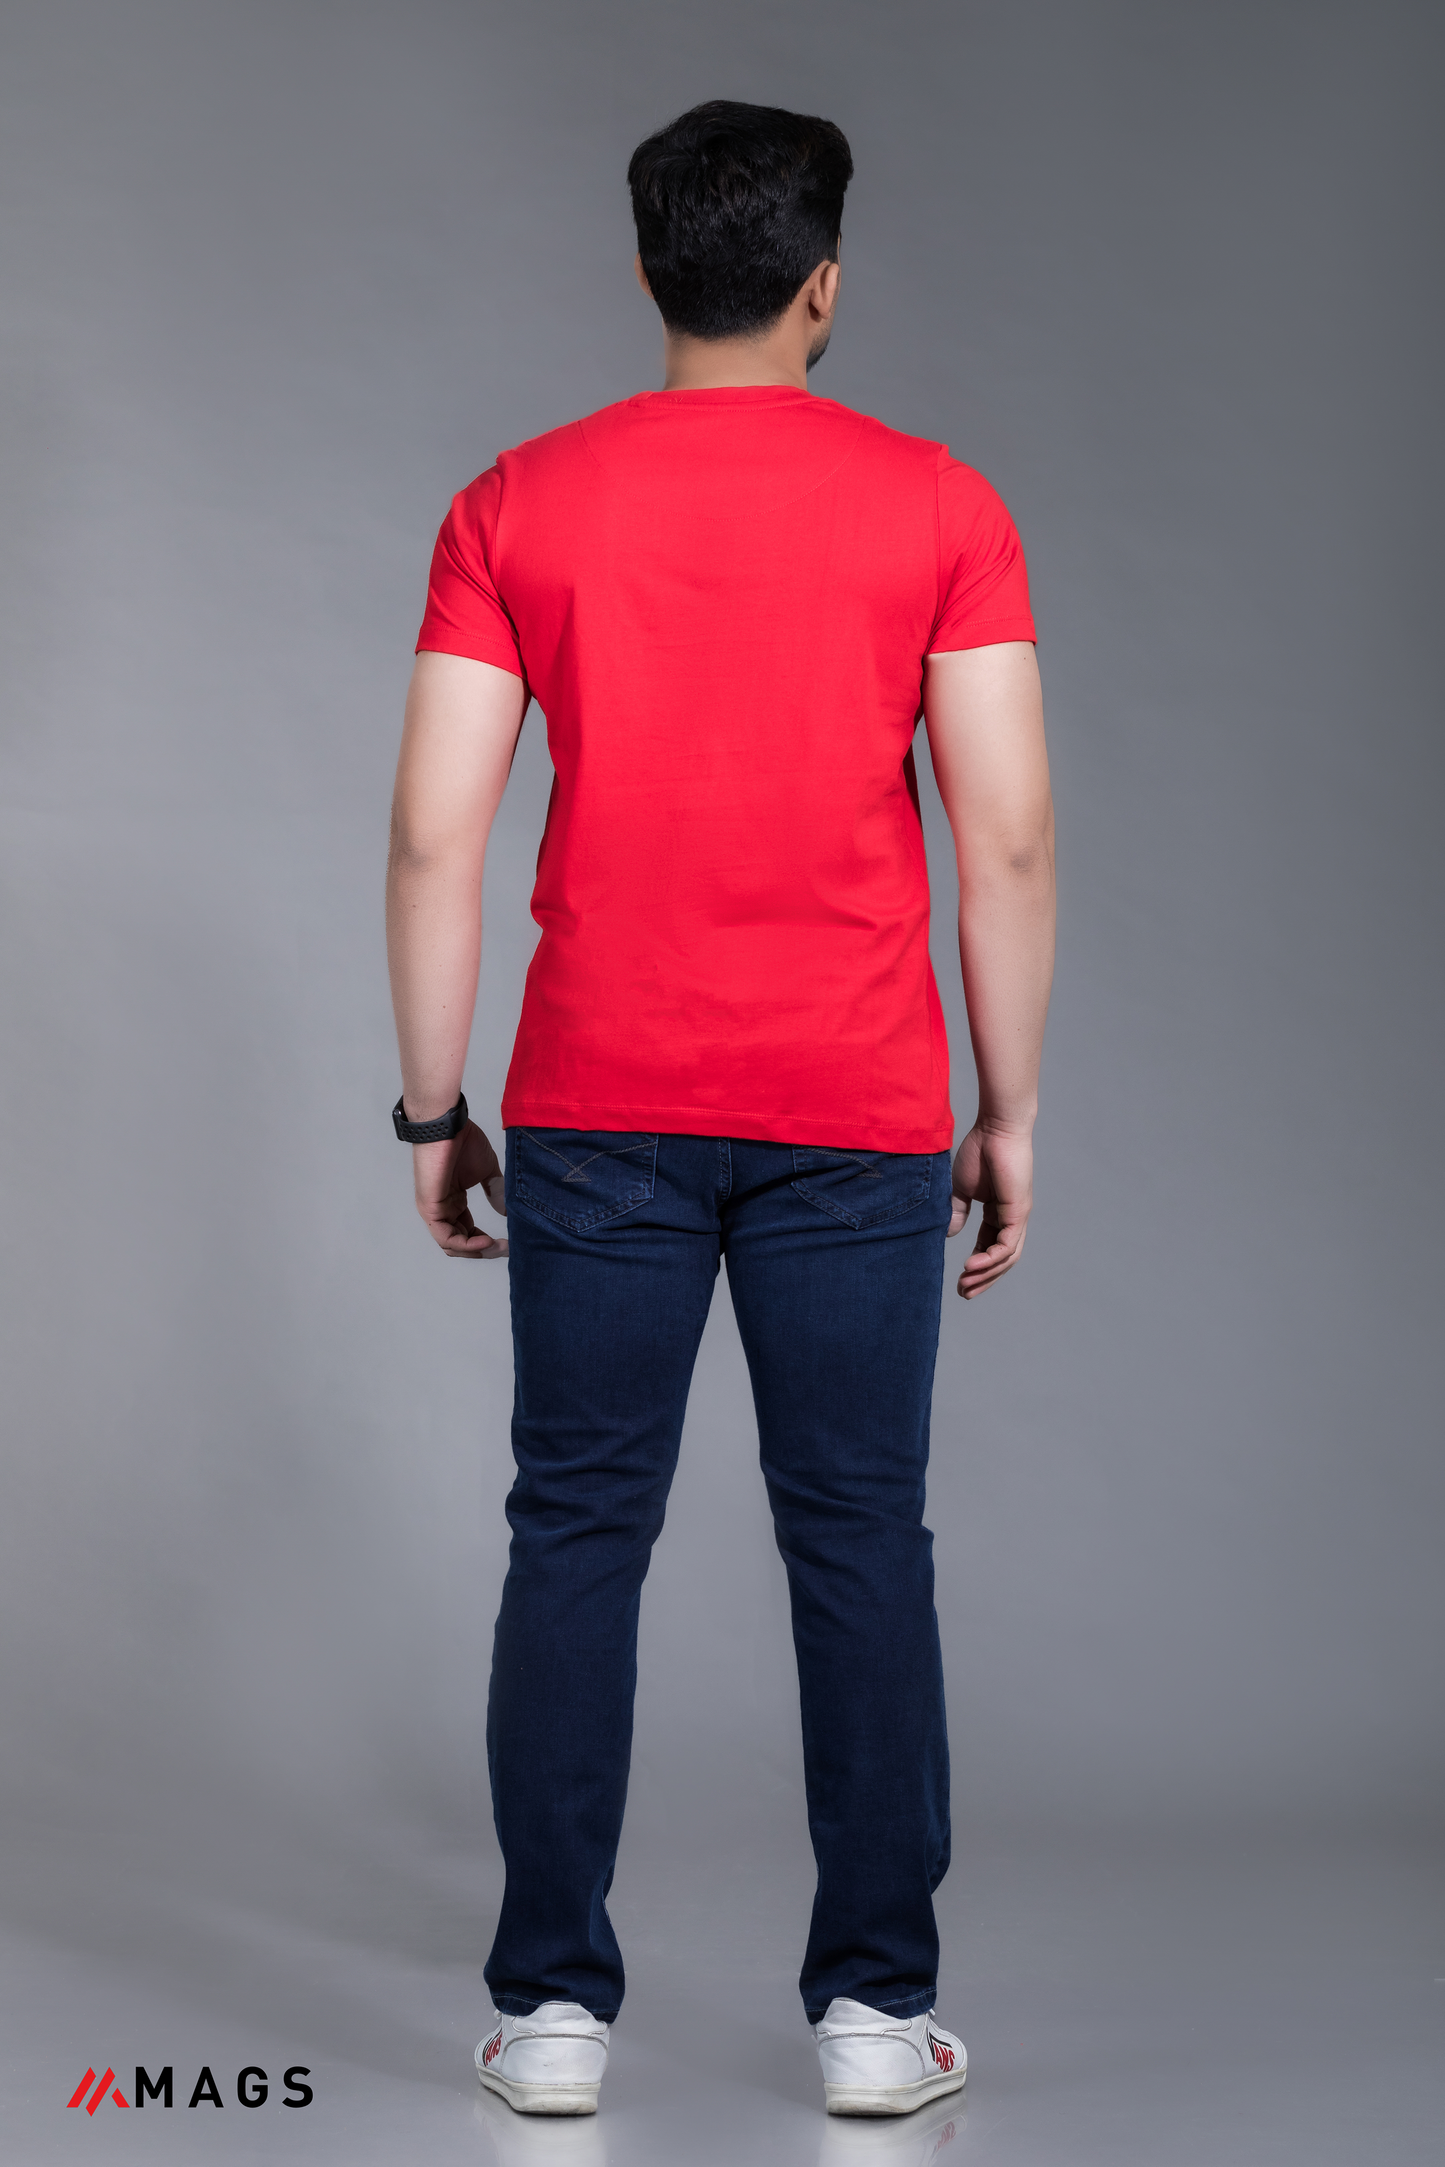 Print-Fiesta Fashion T -shirt - Red